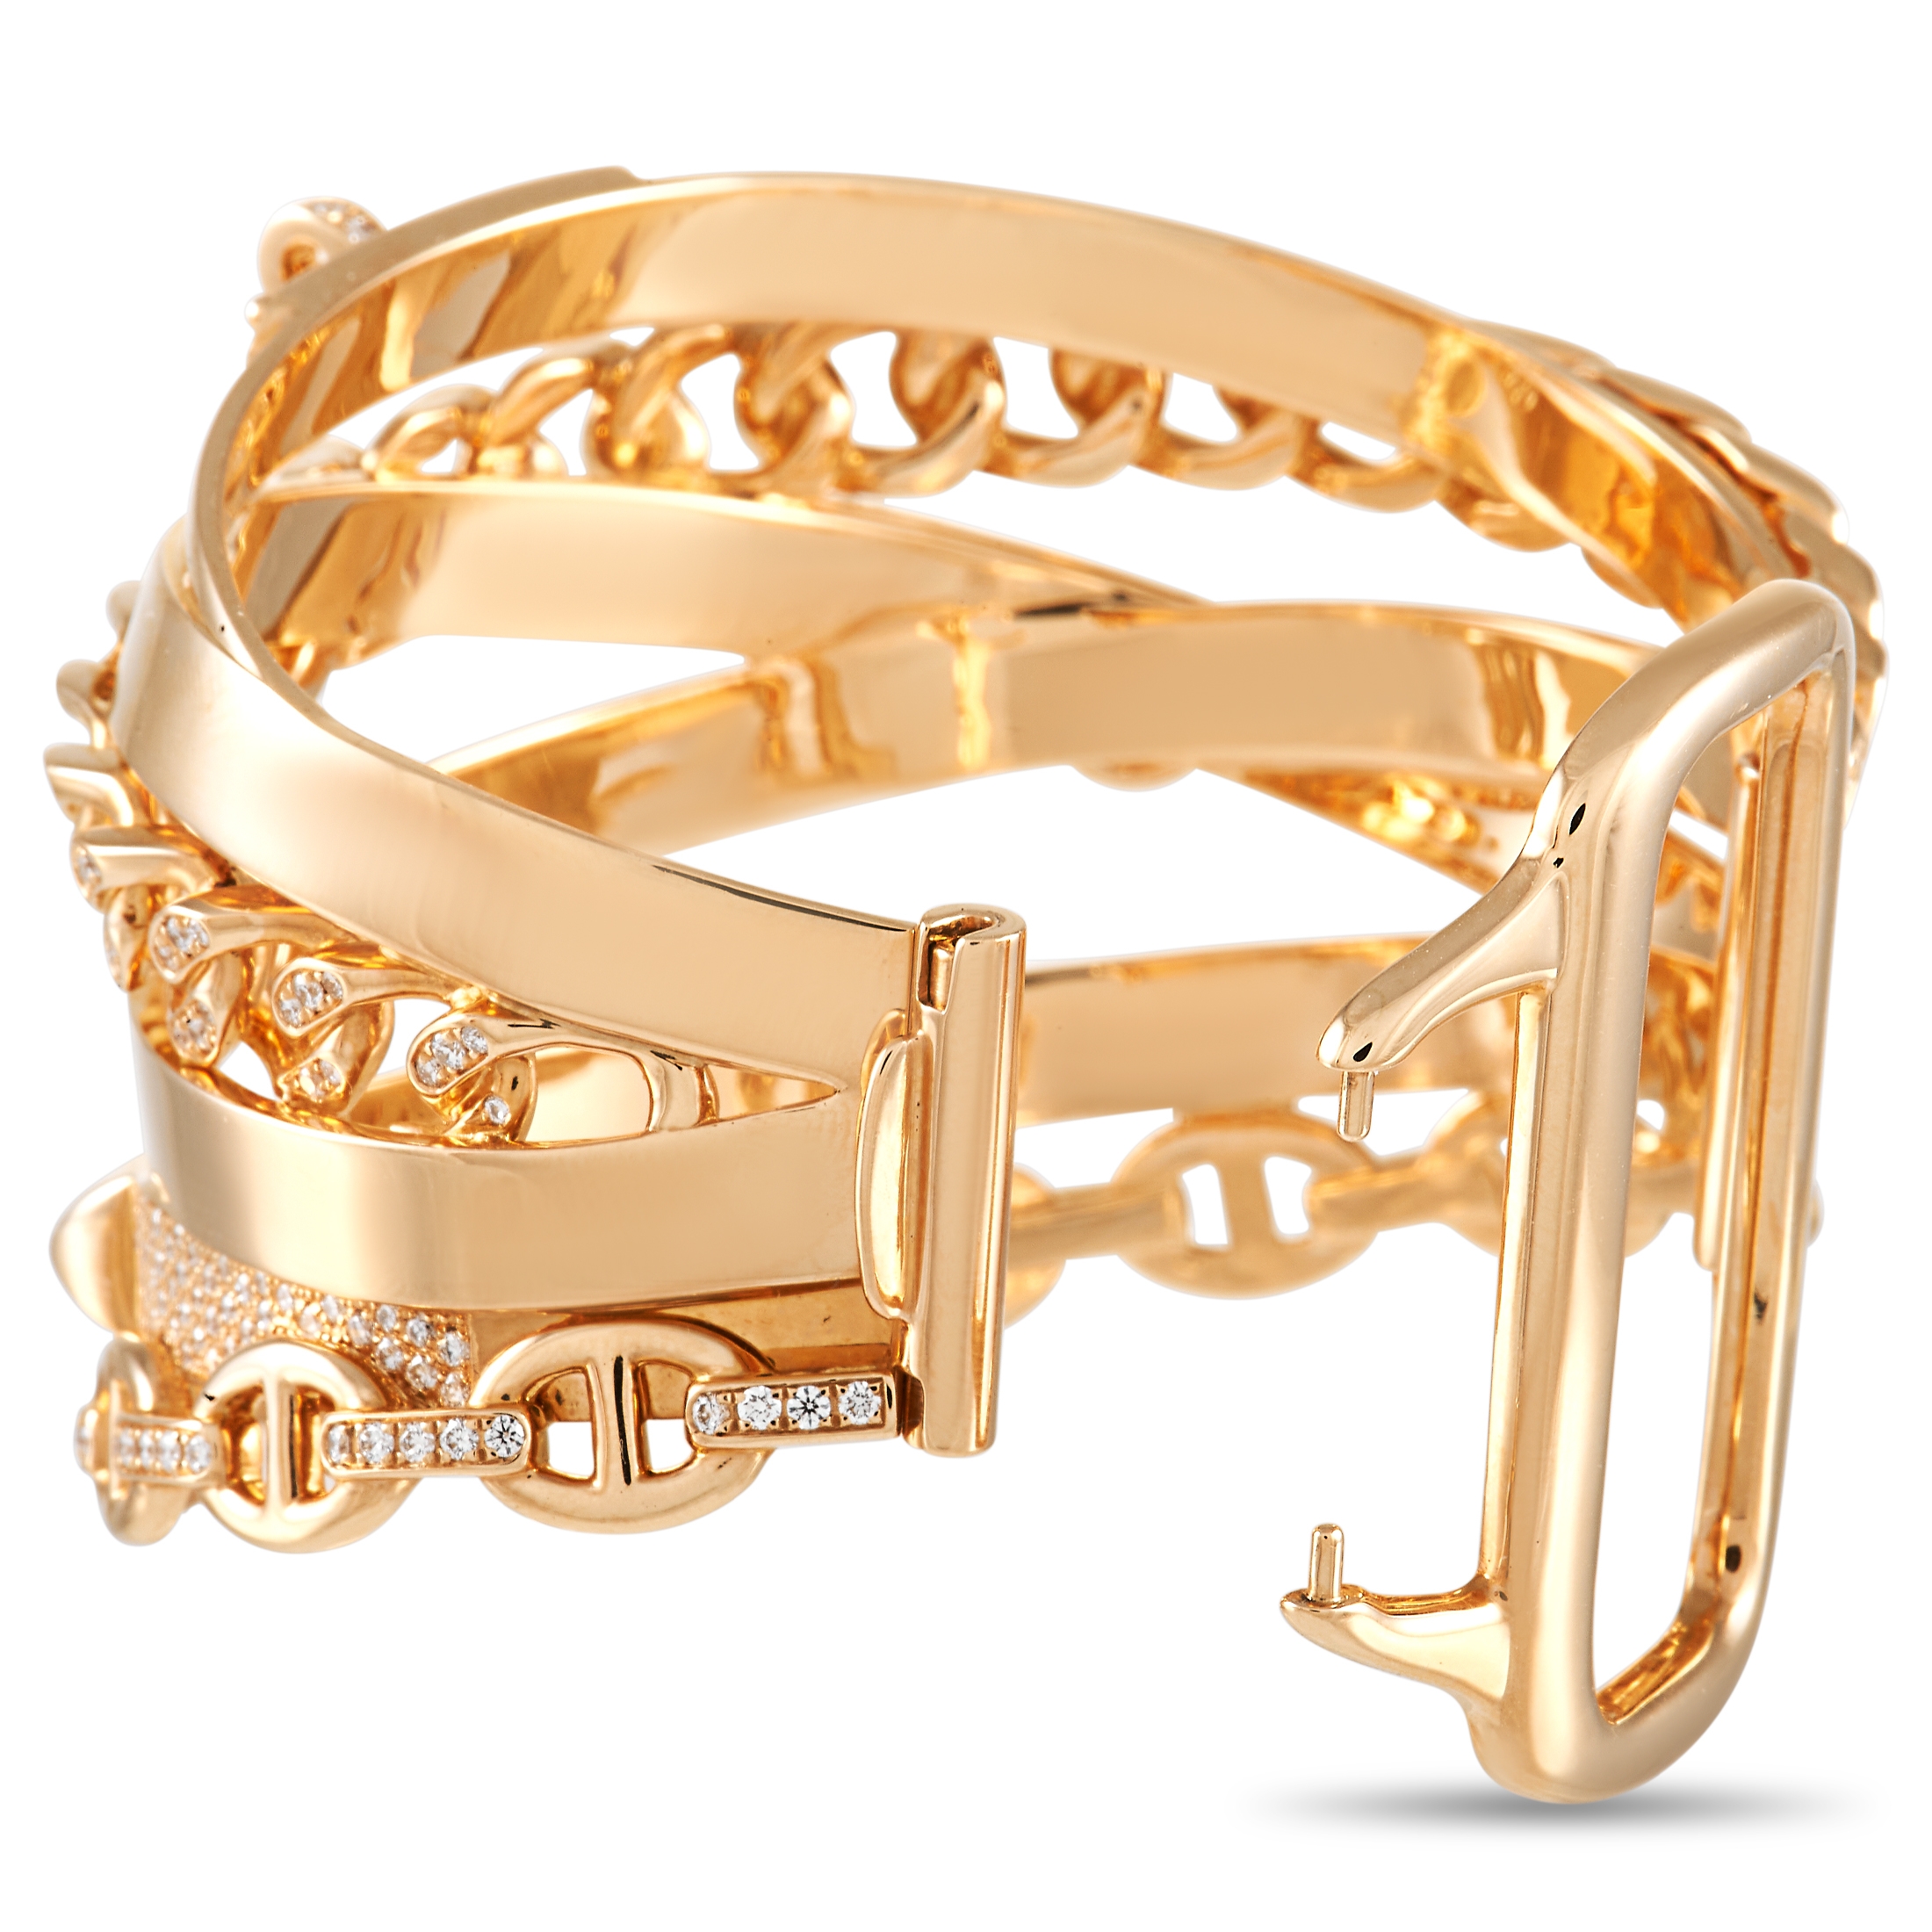 HERMES Jewelry Gift Box | Velvet Pouch | 100% AUTHENTIC | Bracelet | Orange